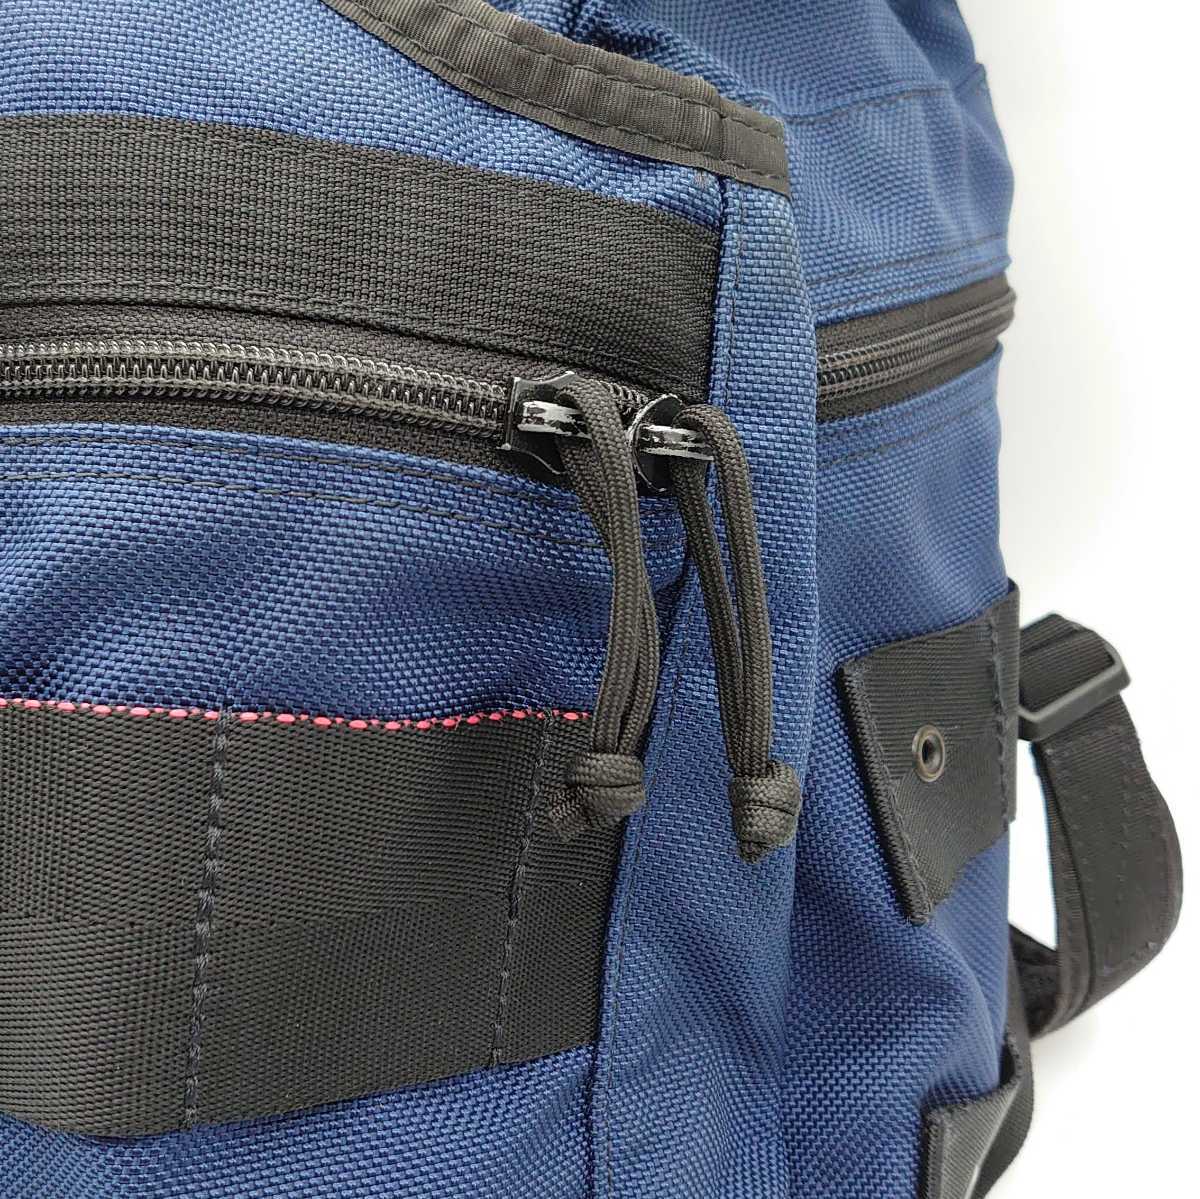 BRIEFING Briefing GYM PACK сумка упаковка рюкзак Day Pack темно-синий America уличный полиэстер редкость tp-22x451